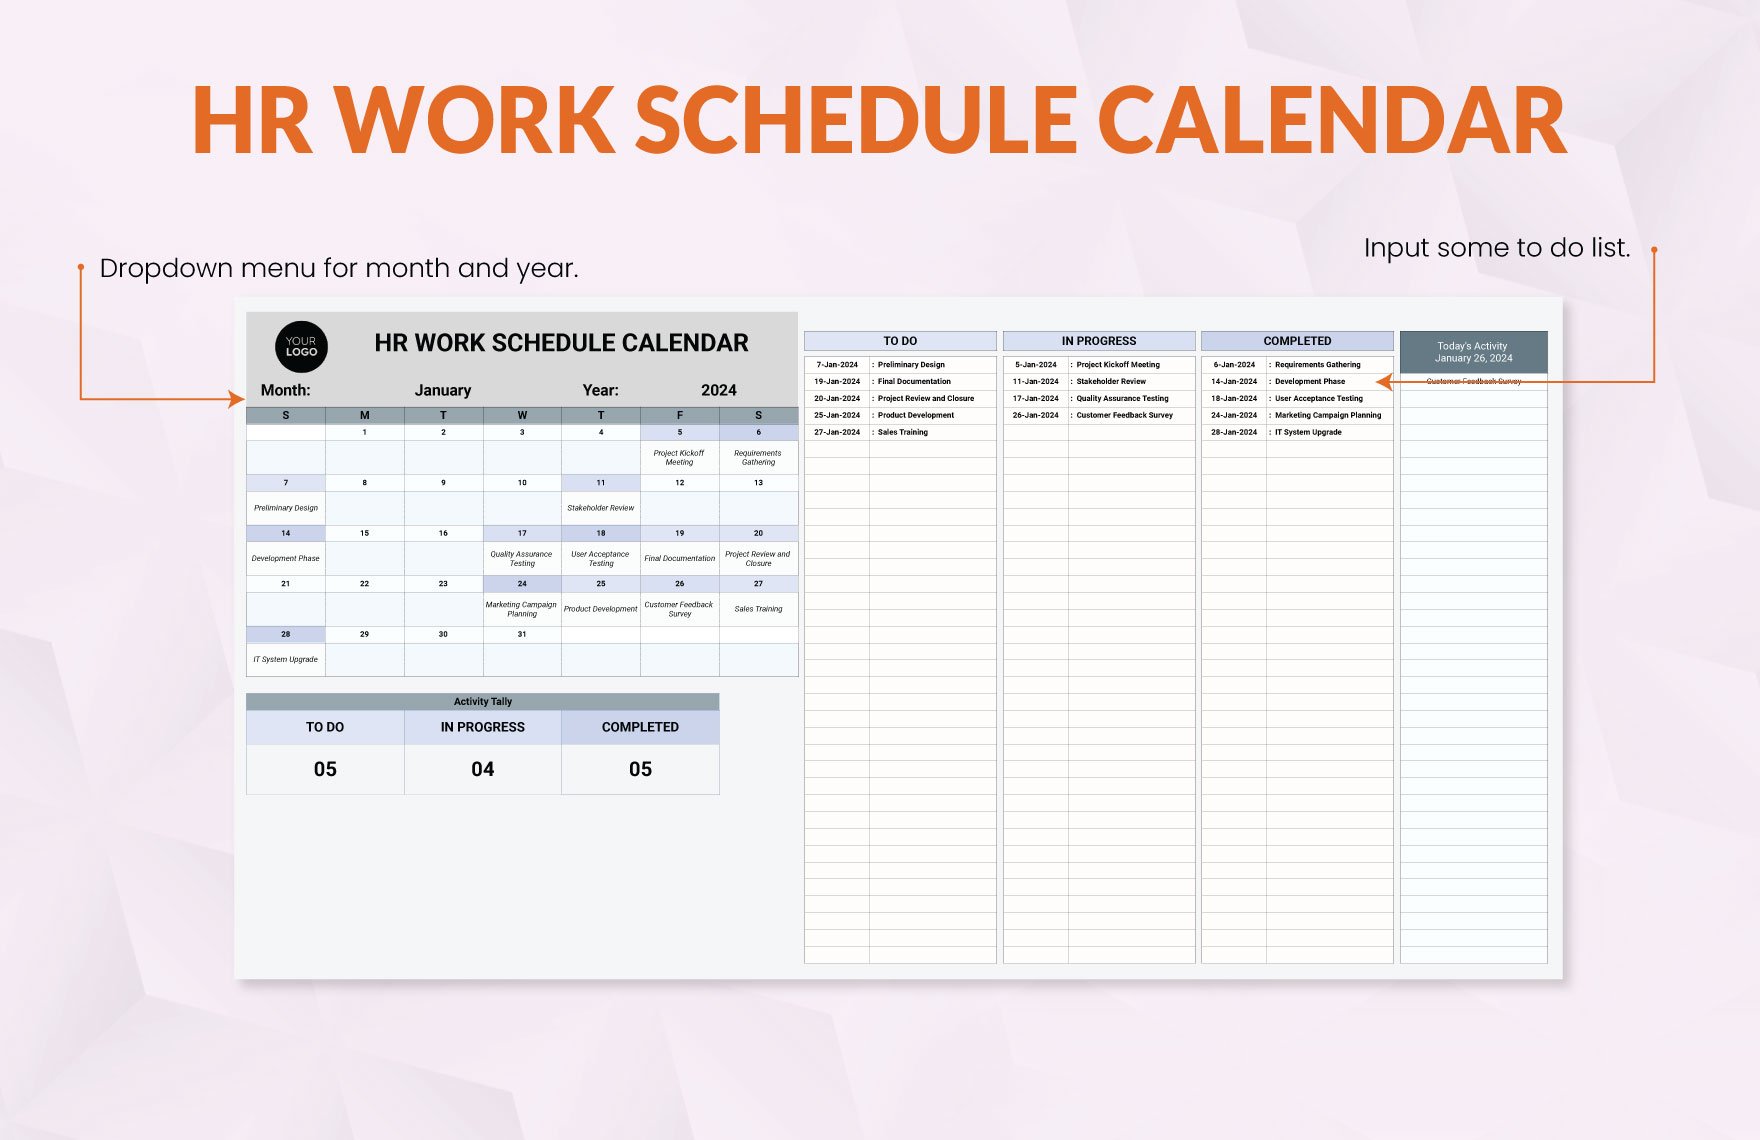 HR Work Schedule Calendar Template